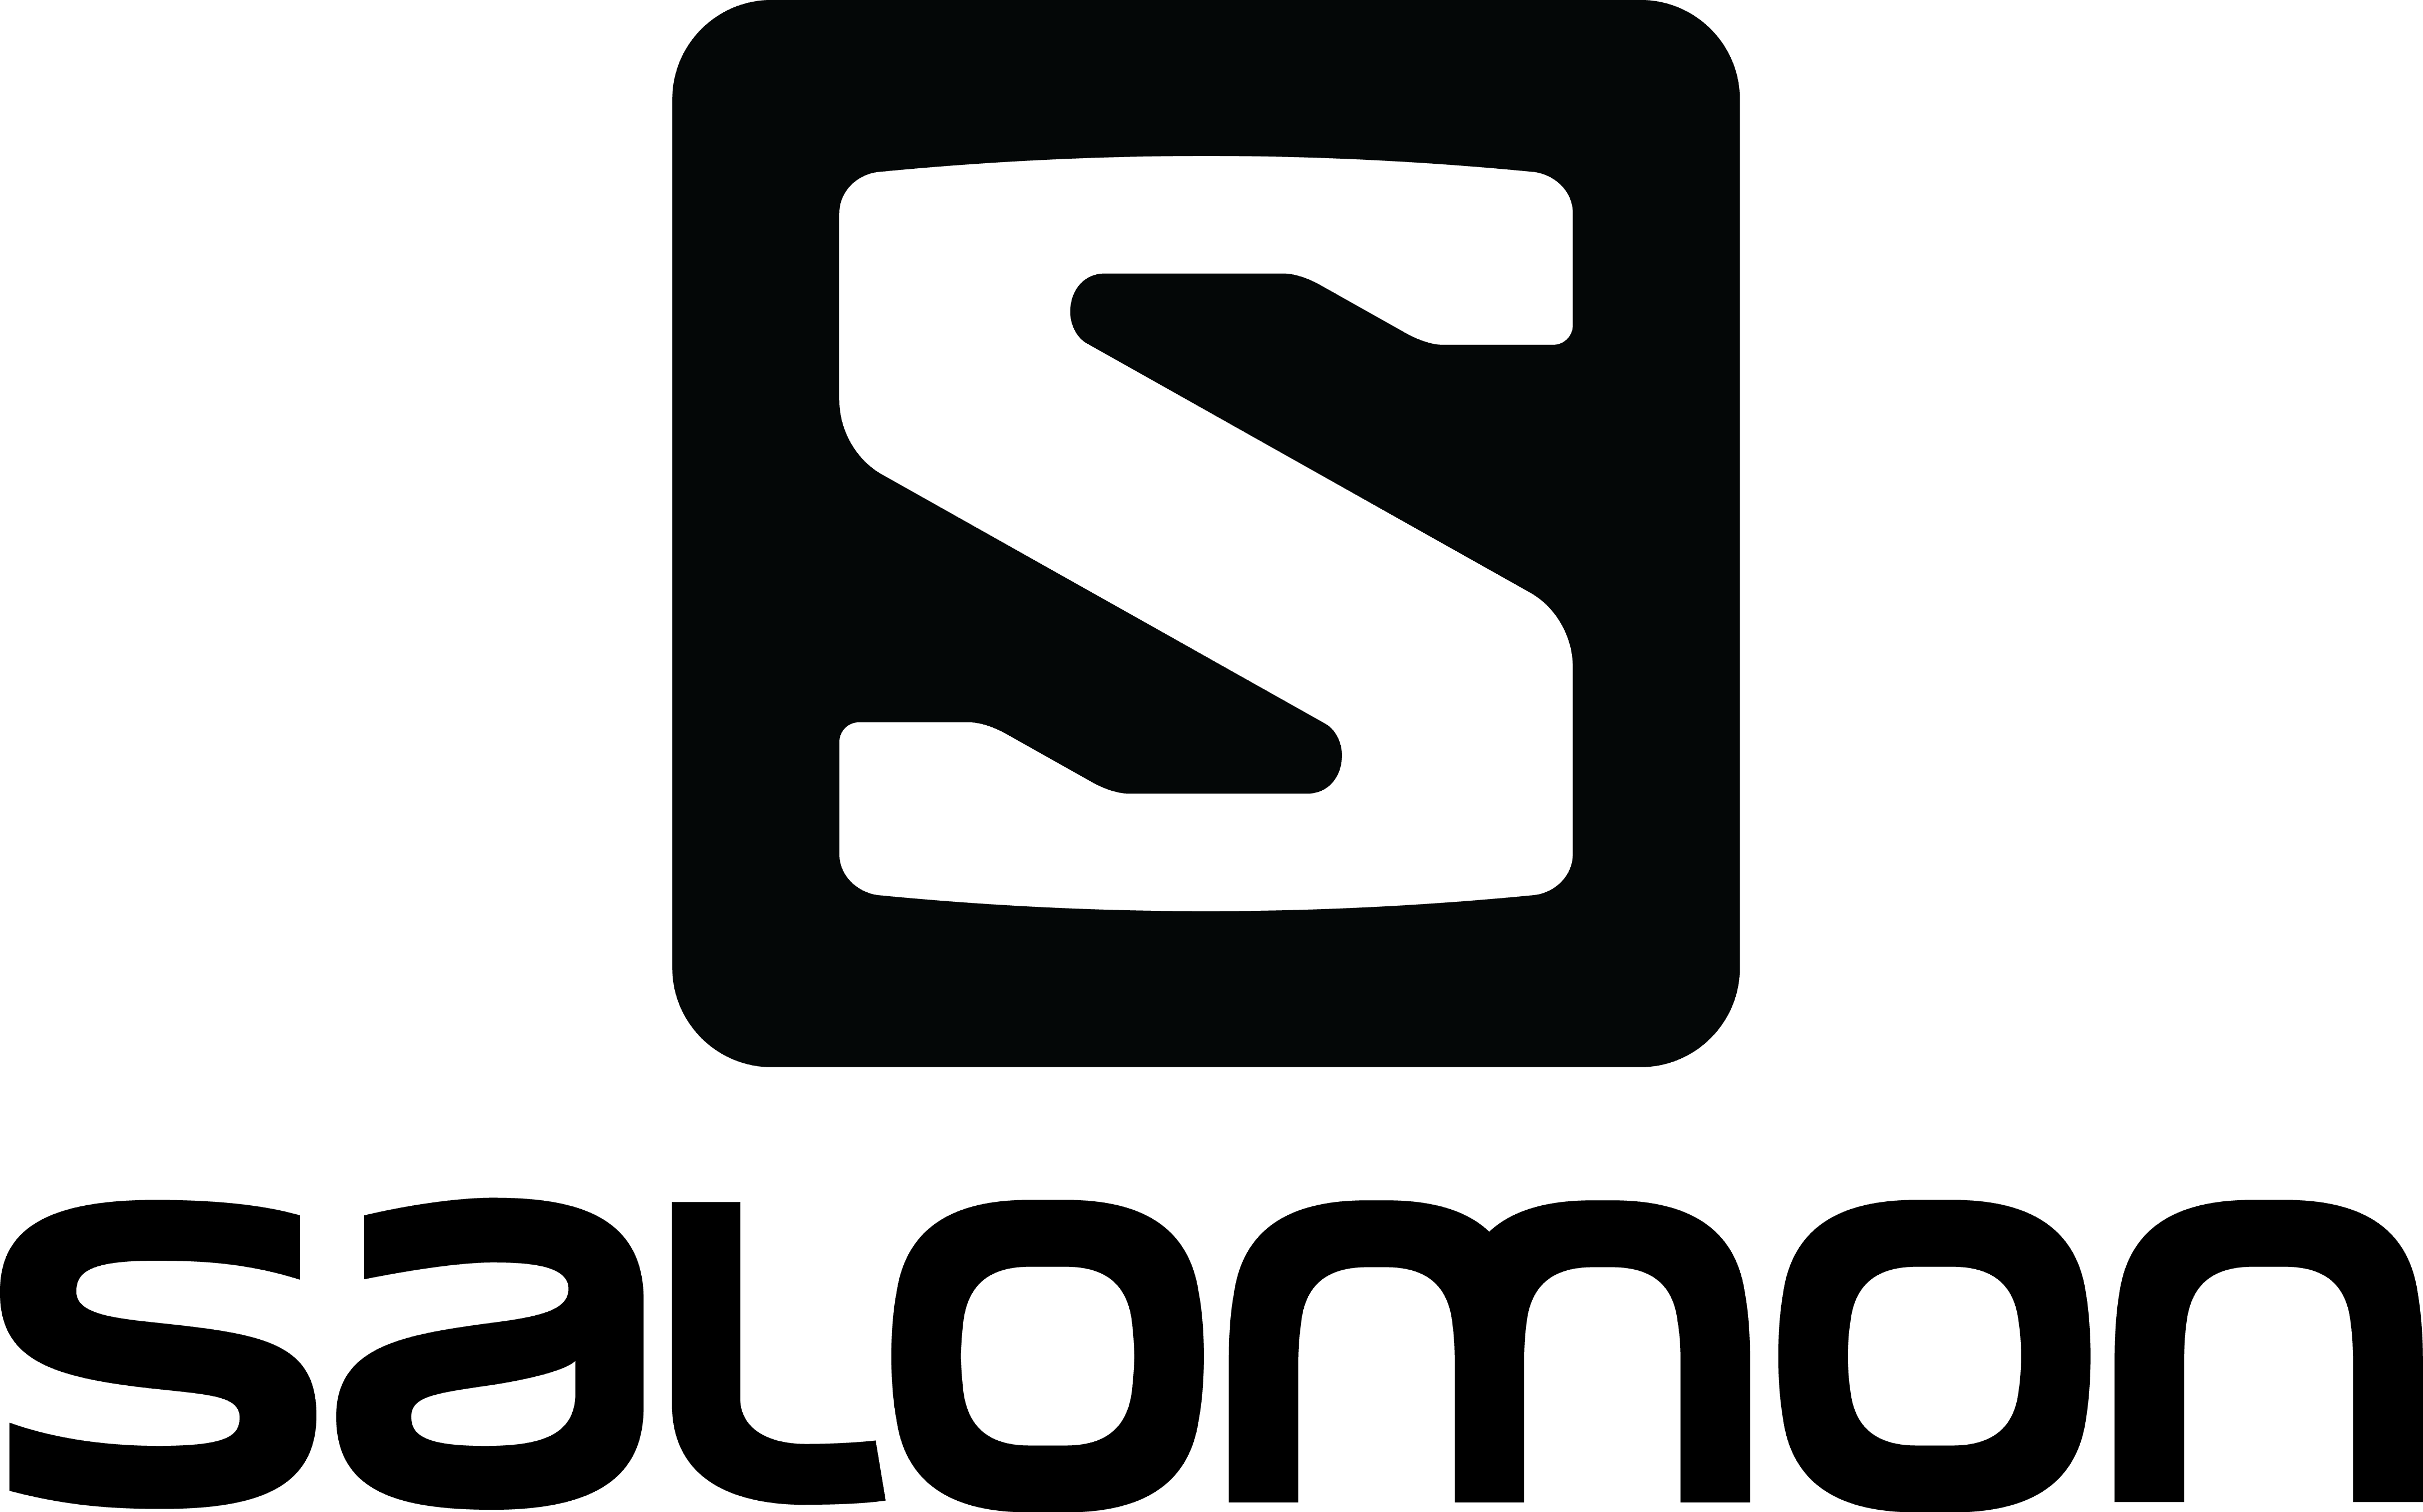 Salomon logo says "Salomon" below an image of a white S in a black square box. 